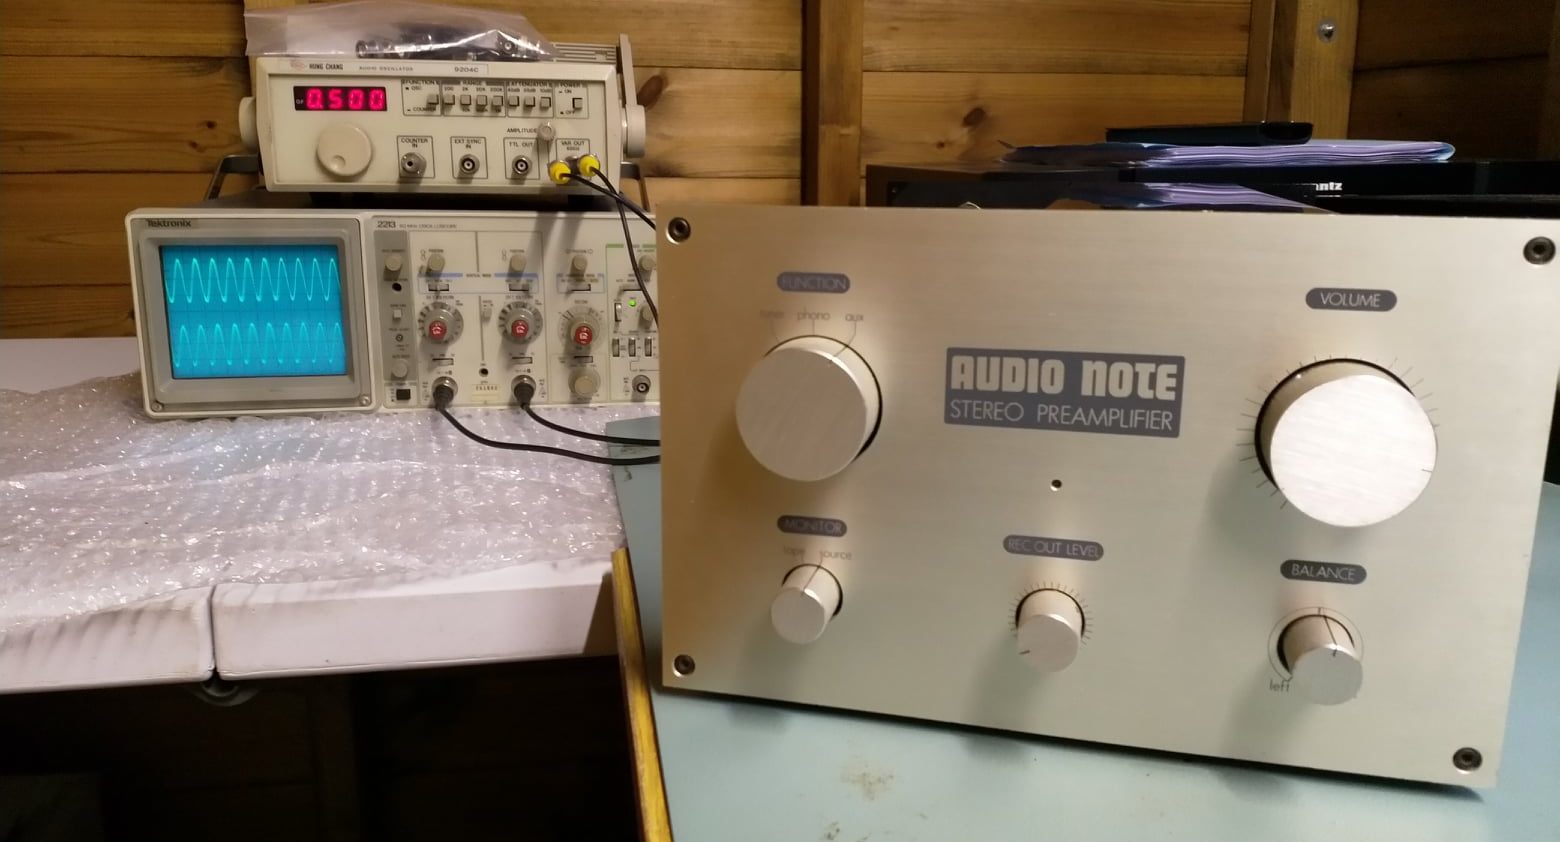 Testing Audio Note Pre-Amplifier